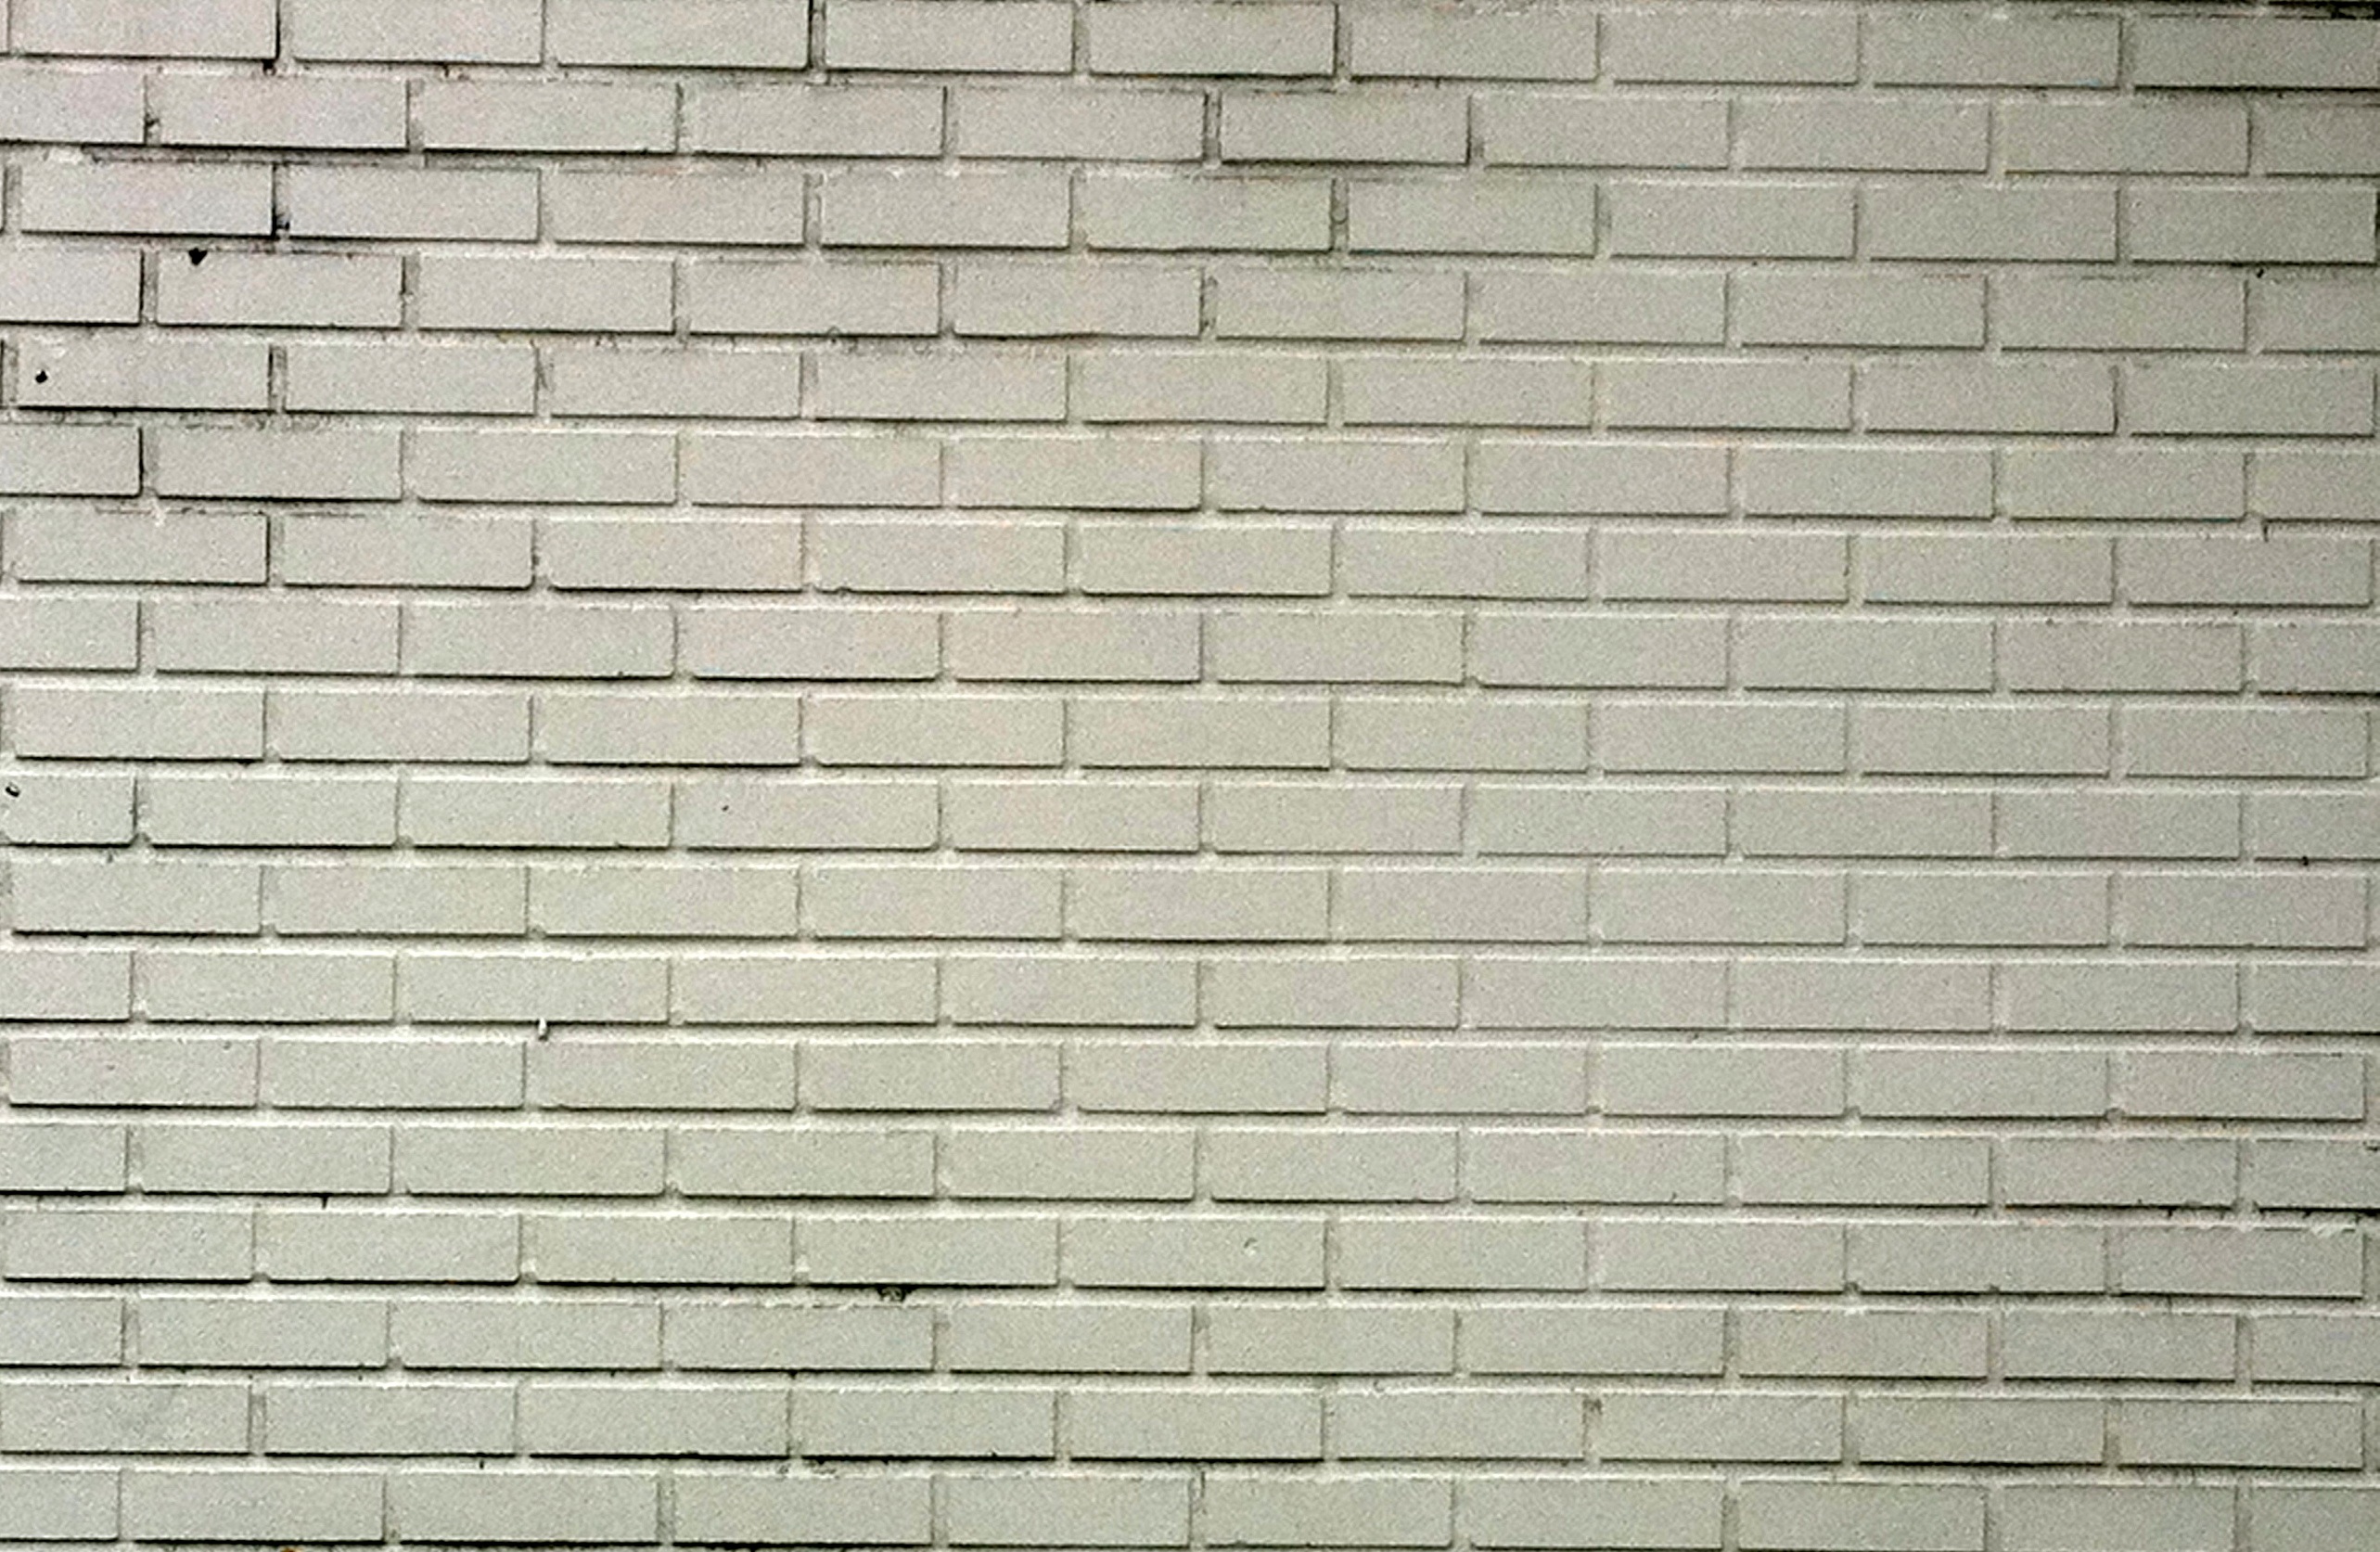 Brick Wall Black And White Wallpaper